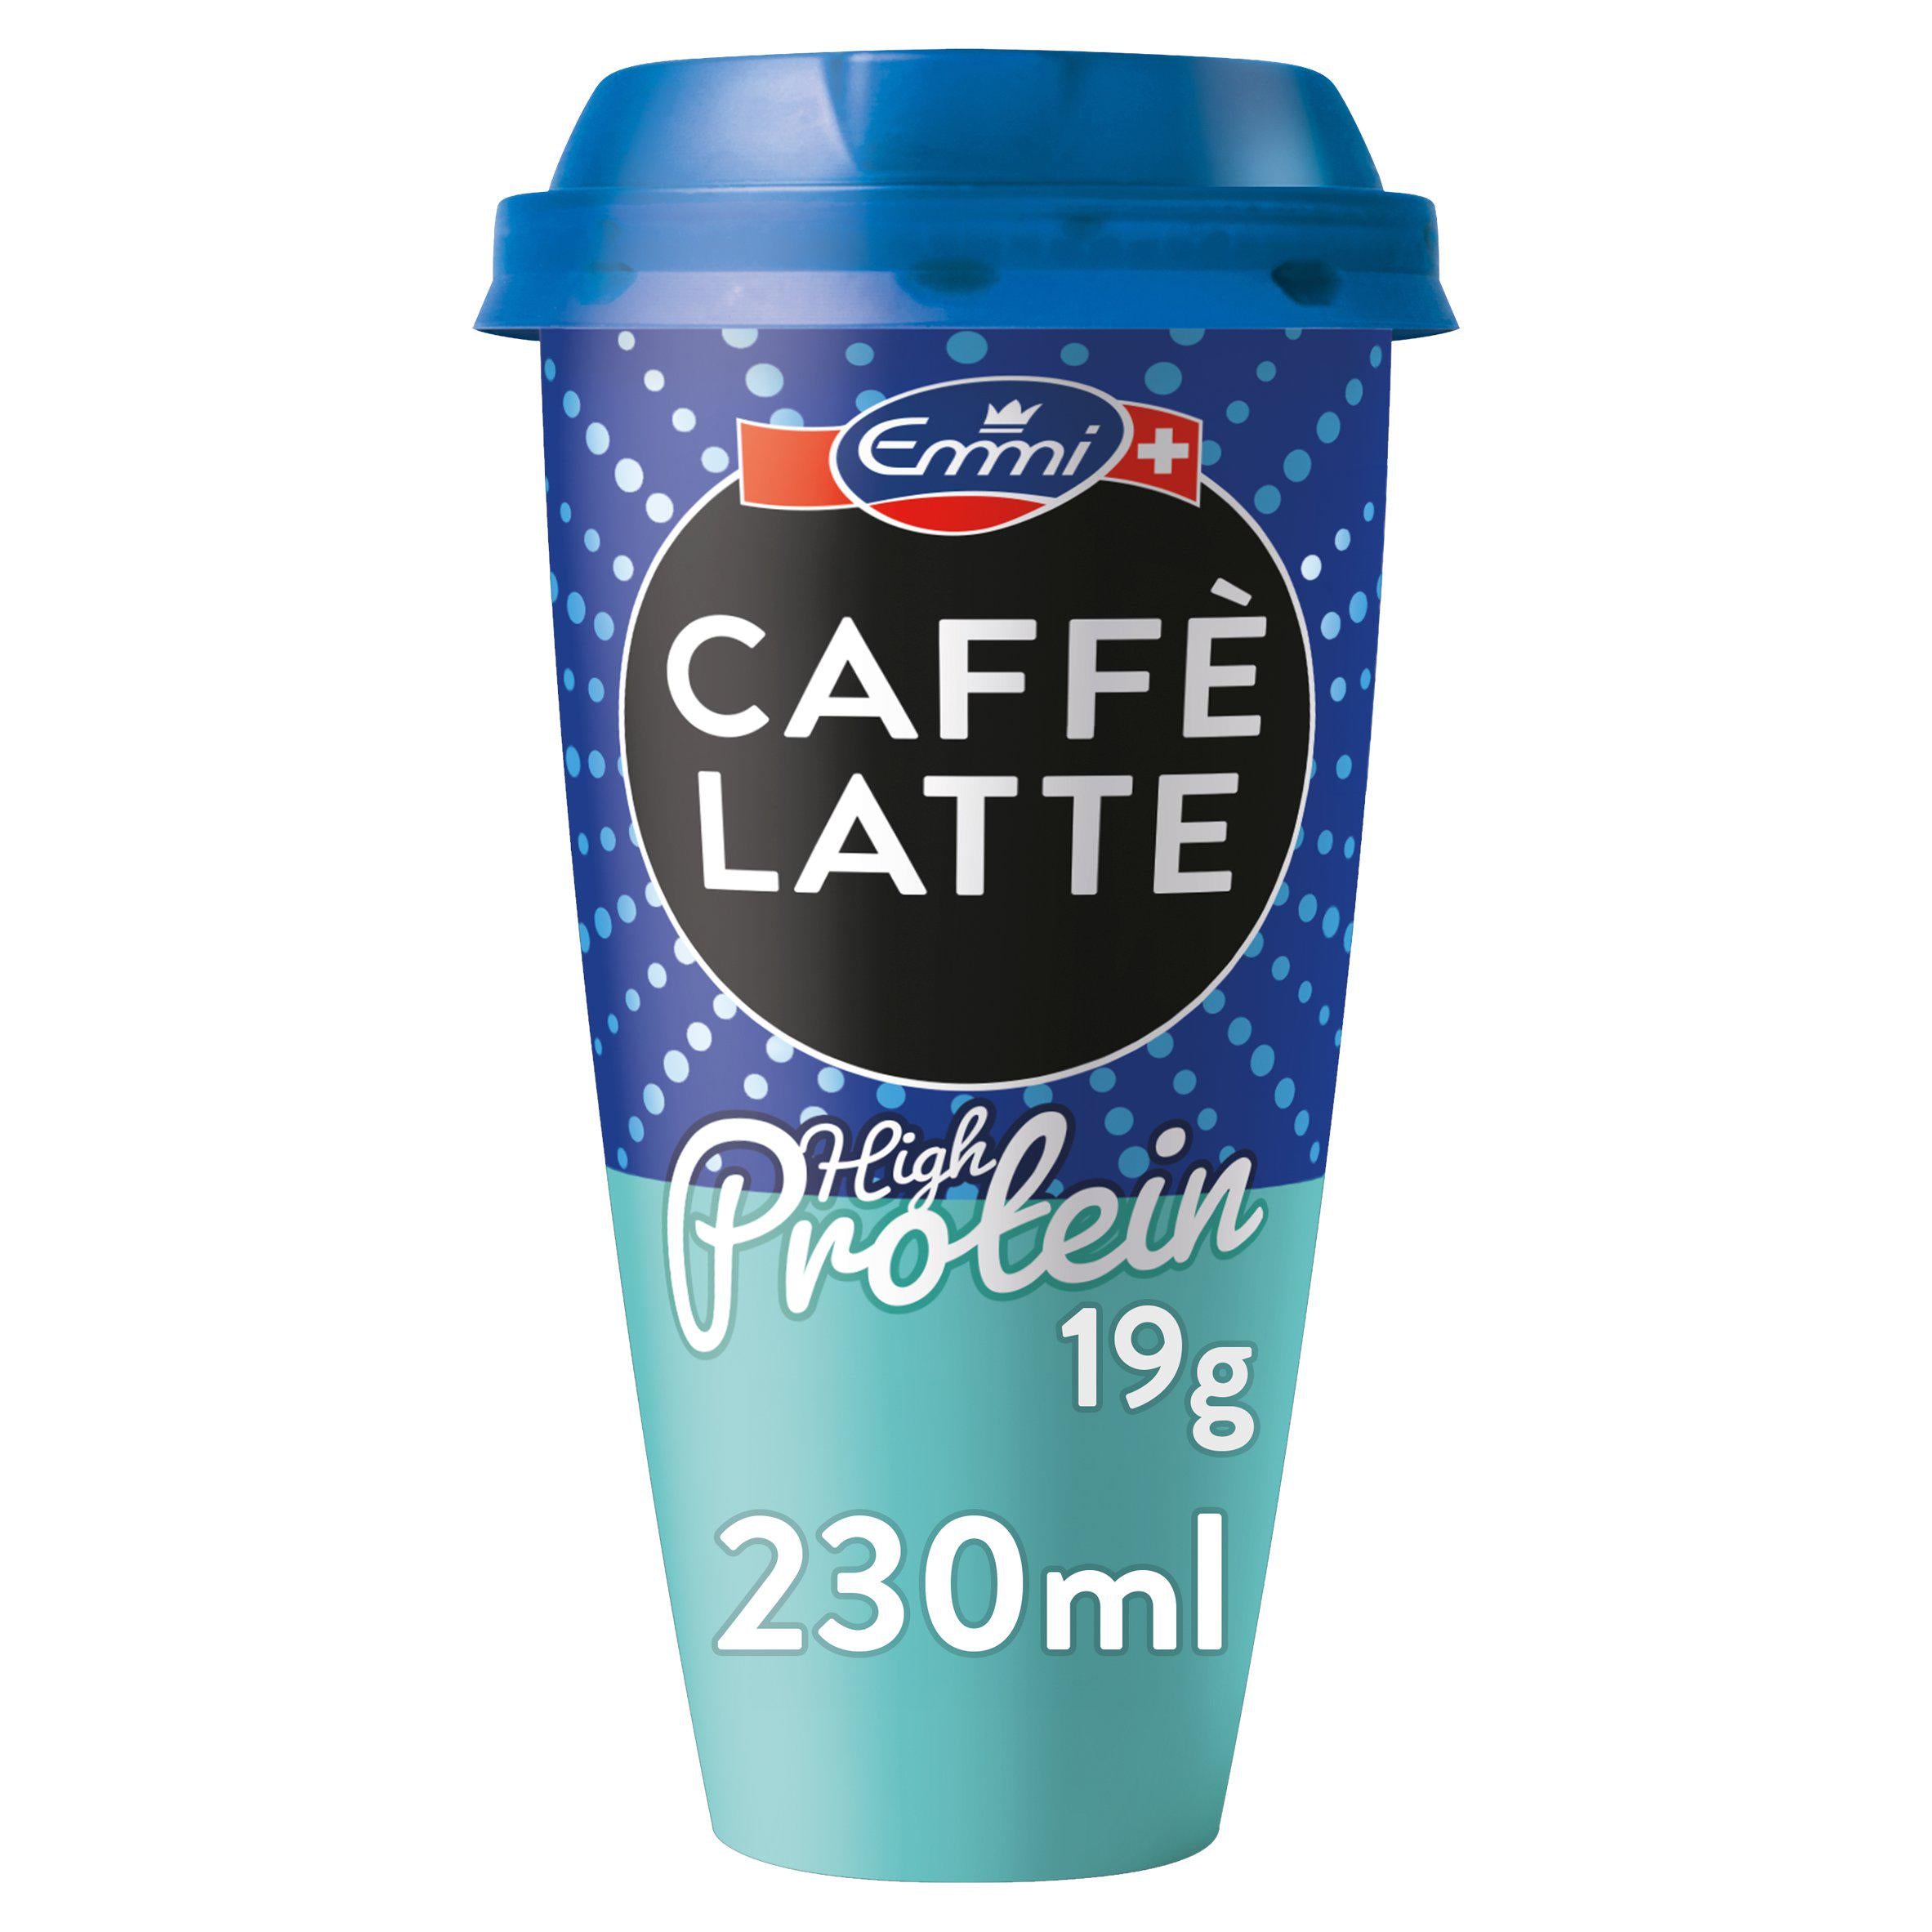 Emmi High Protein Caffe Latte 230ml GOODS Sainsburys   